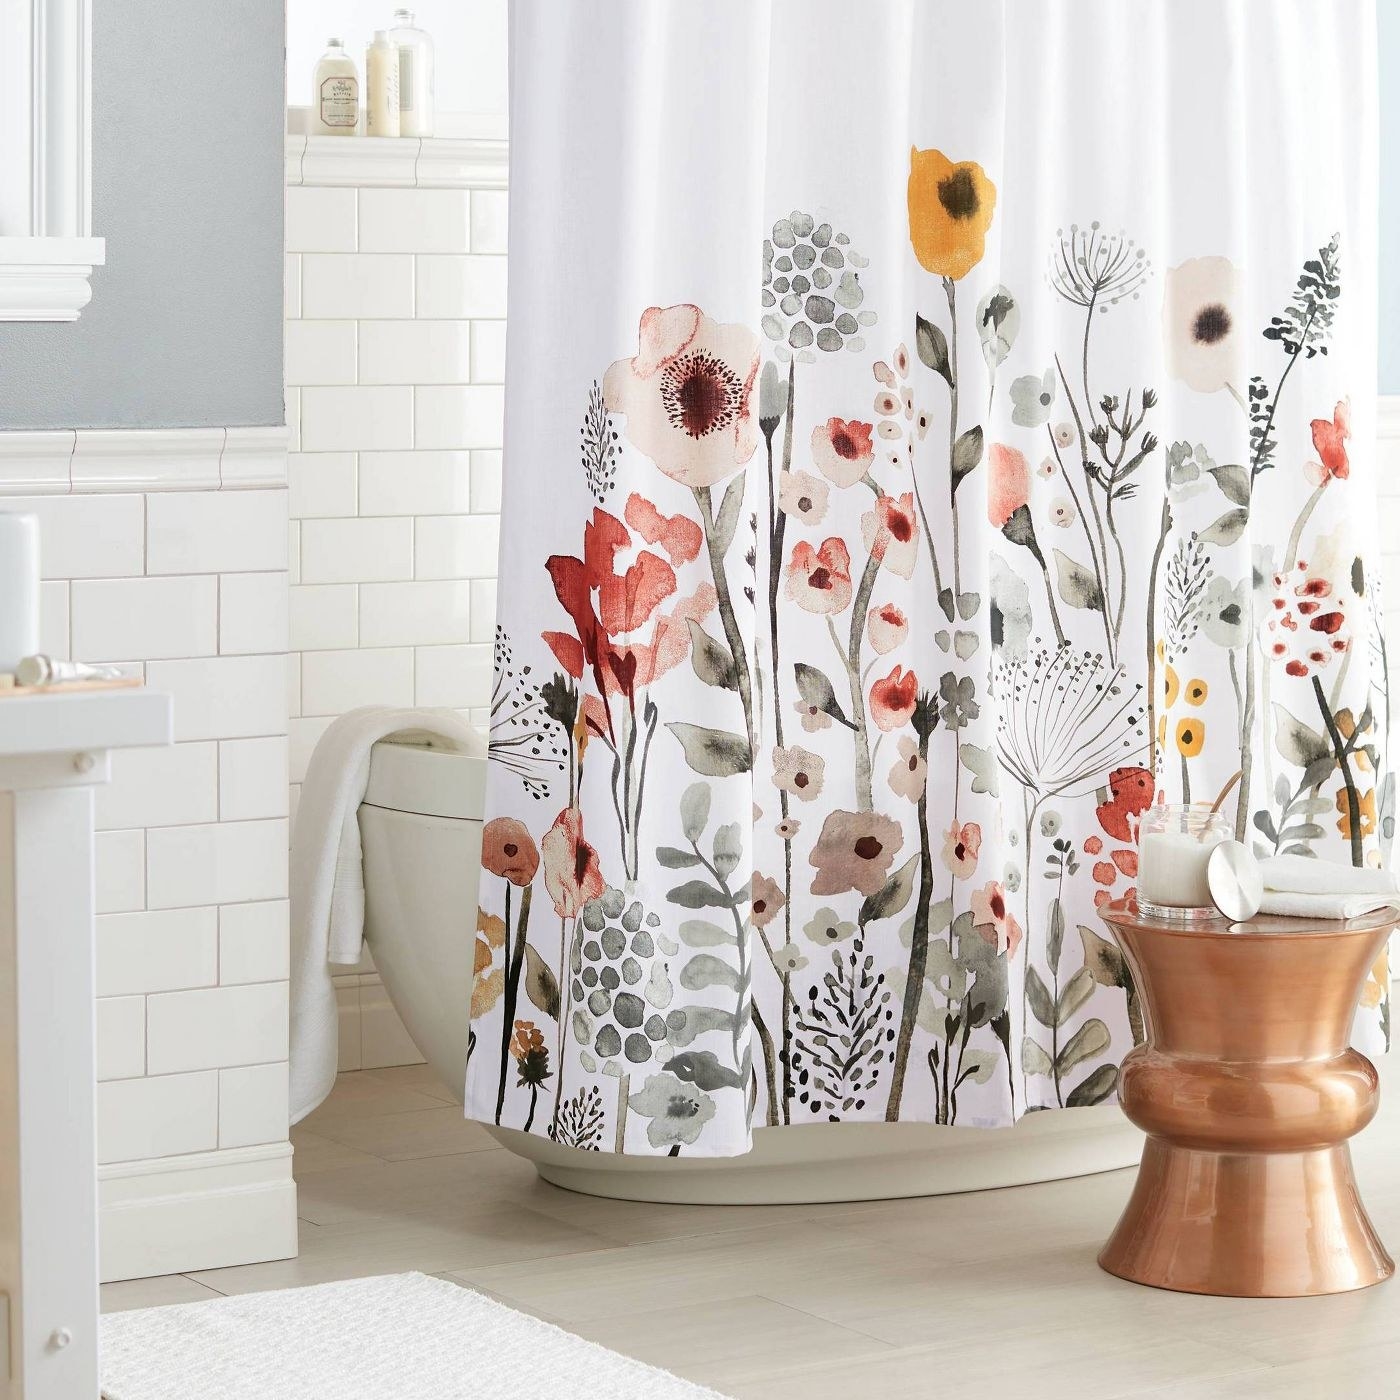 A floral shower curtain in a bathroom 